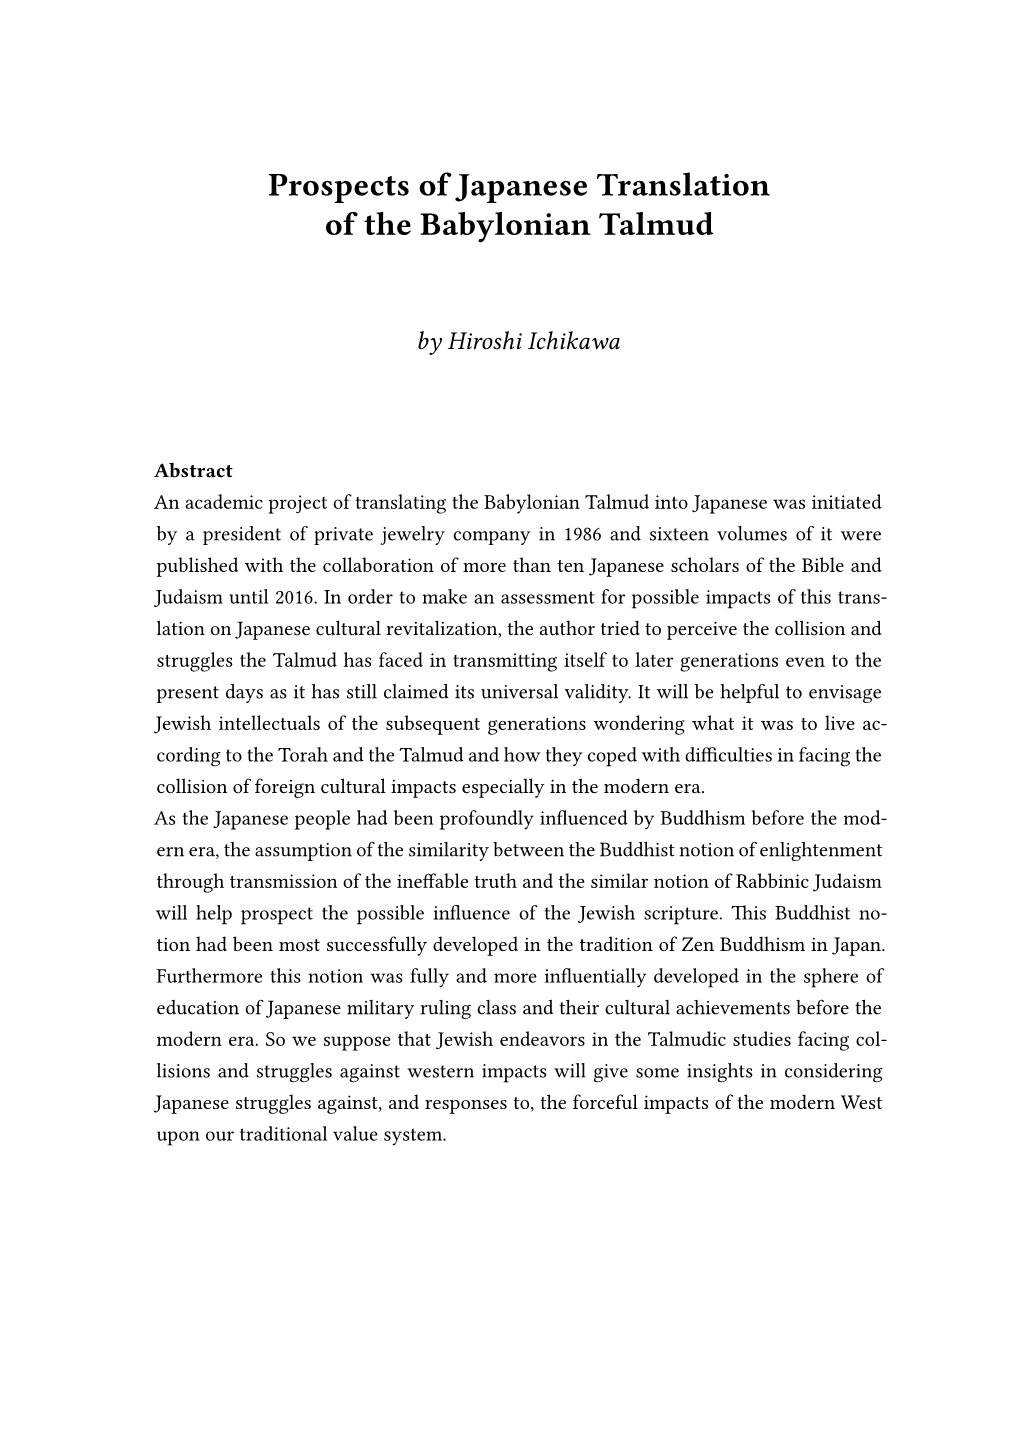 Prospects of Japanese Translation of the Babylonian Talmud